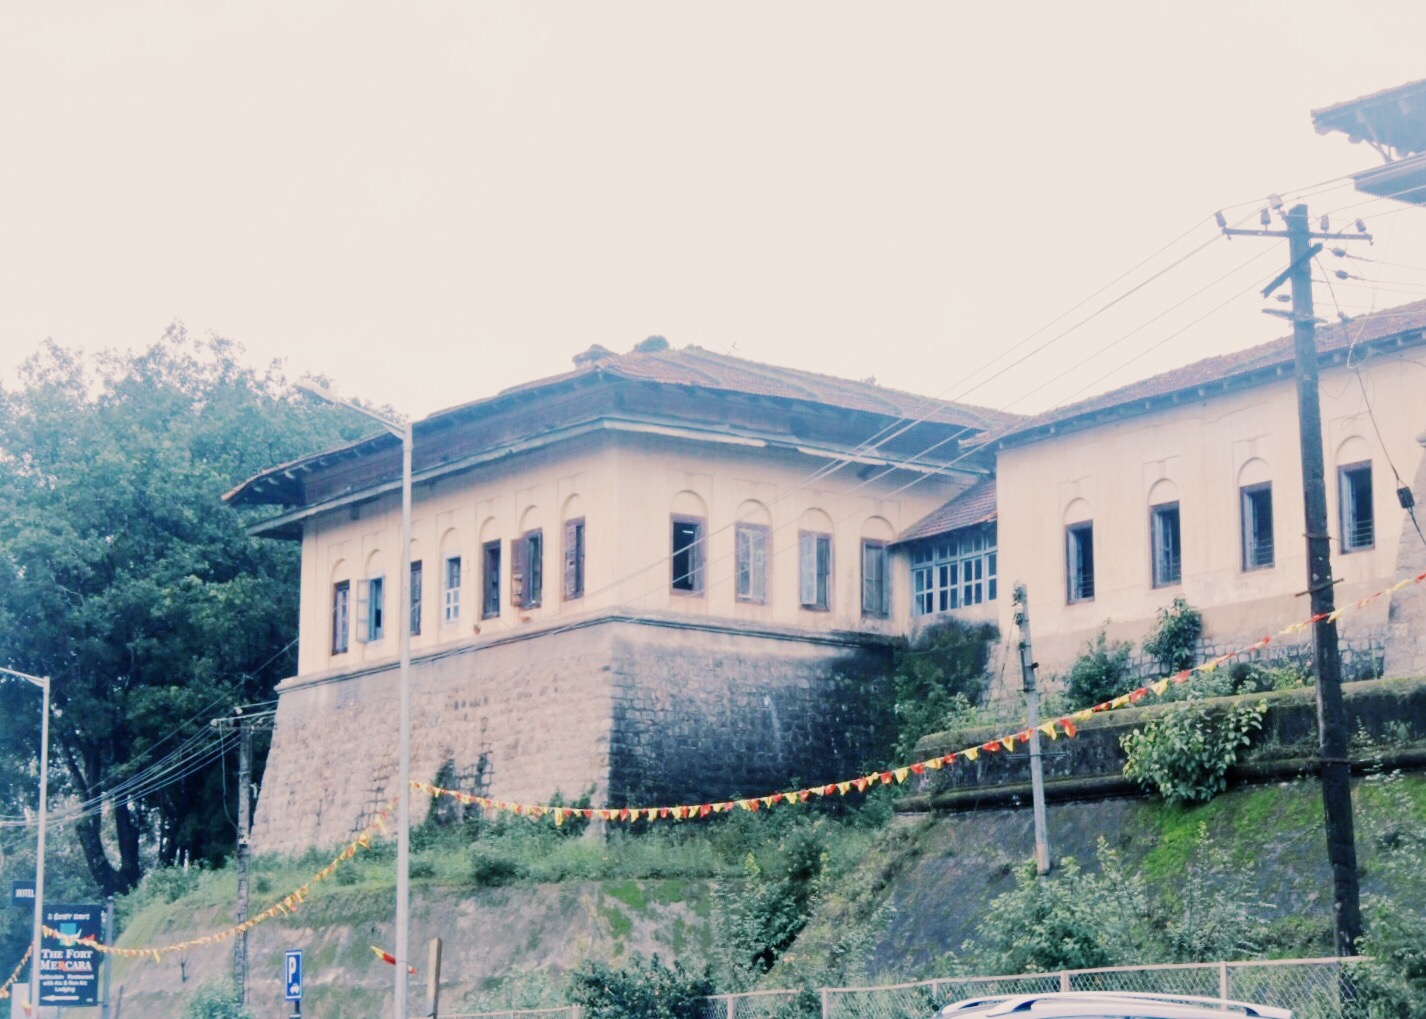 Exteriors of the Madikeri fort